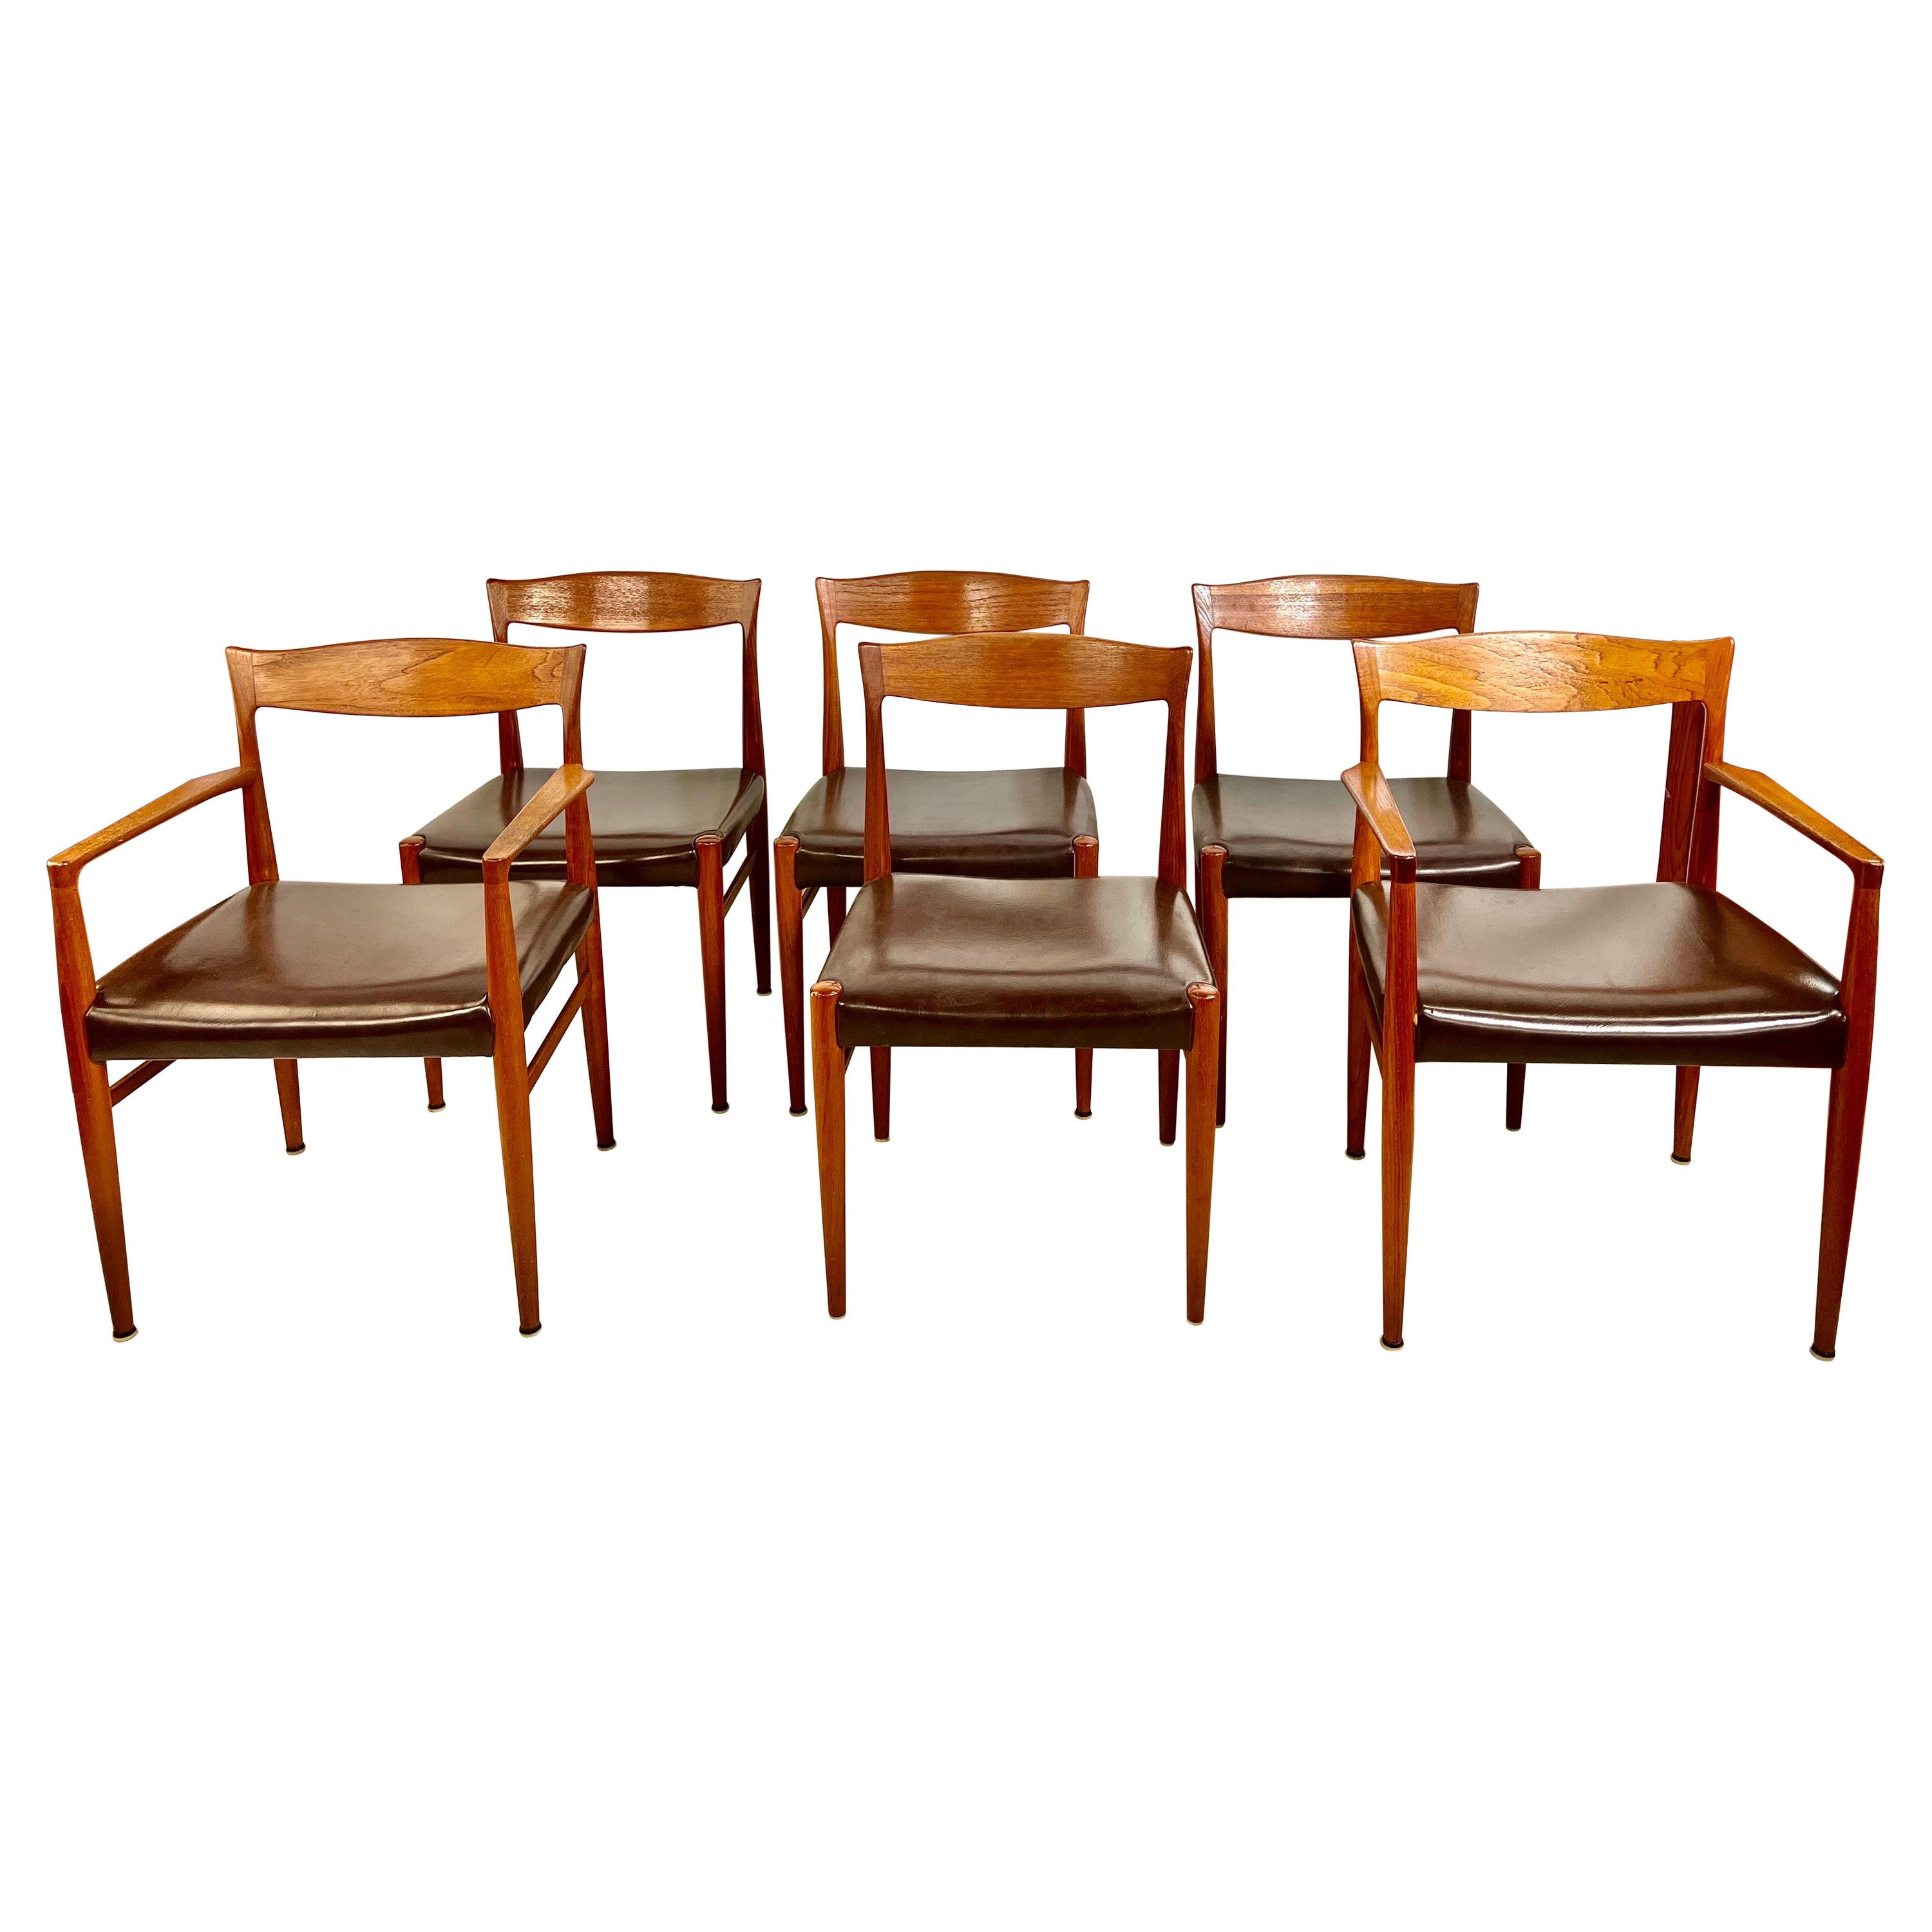 Vintage Danish Teak Sculptural Dining Chairs - a Set of 6